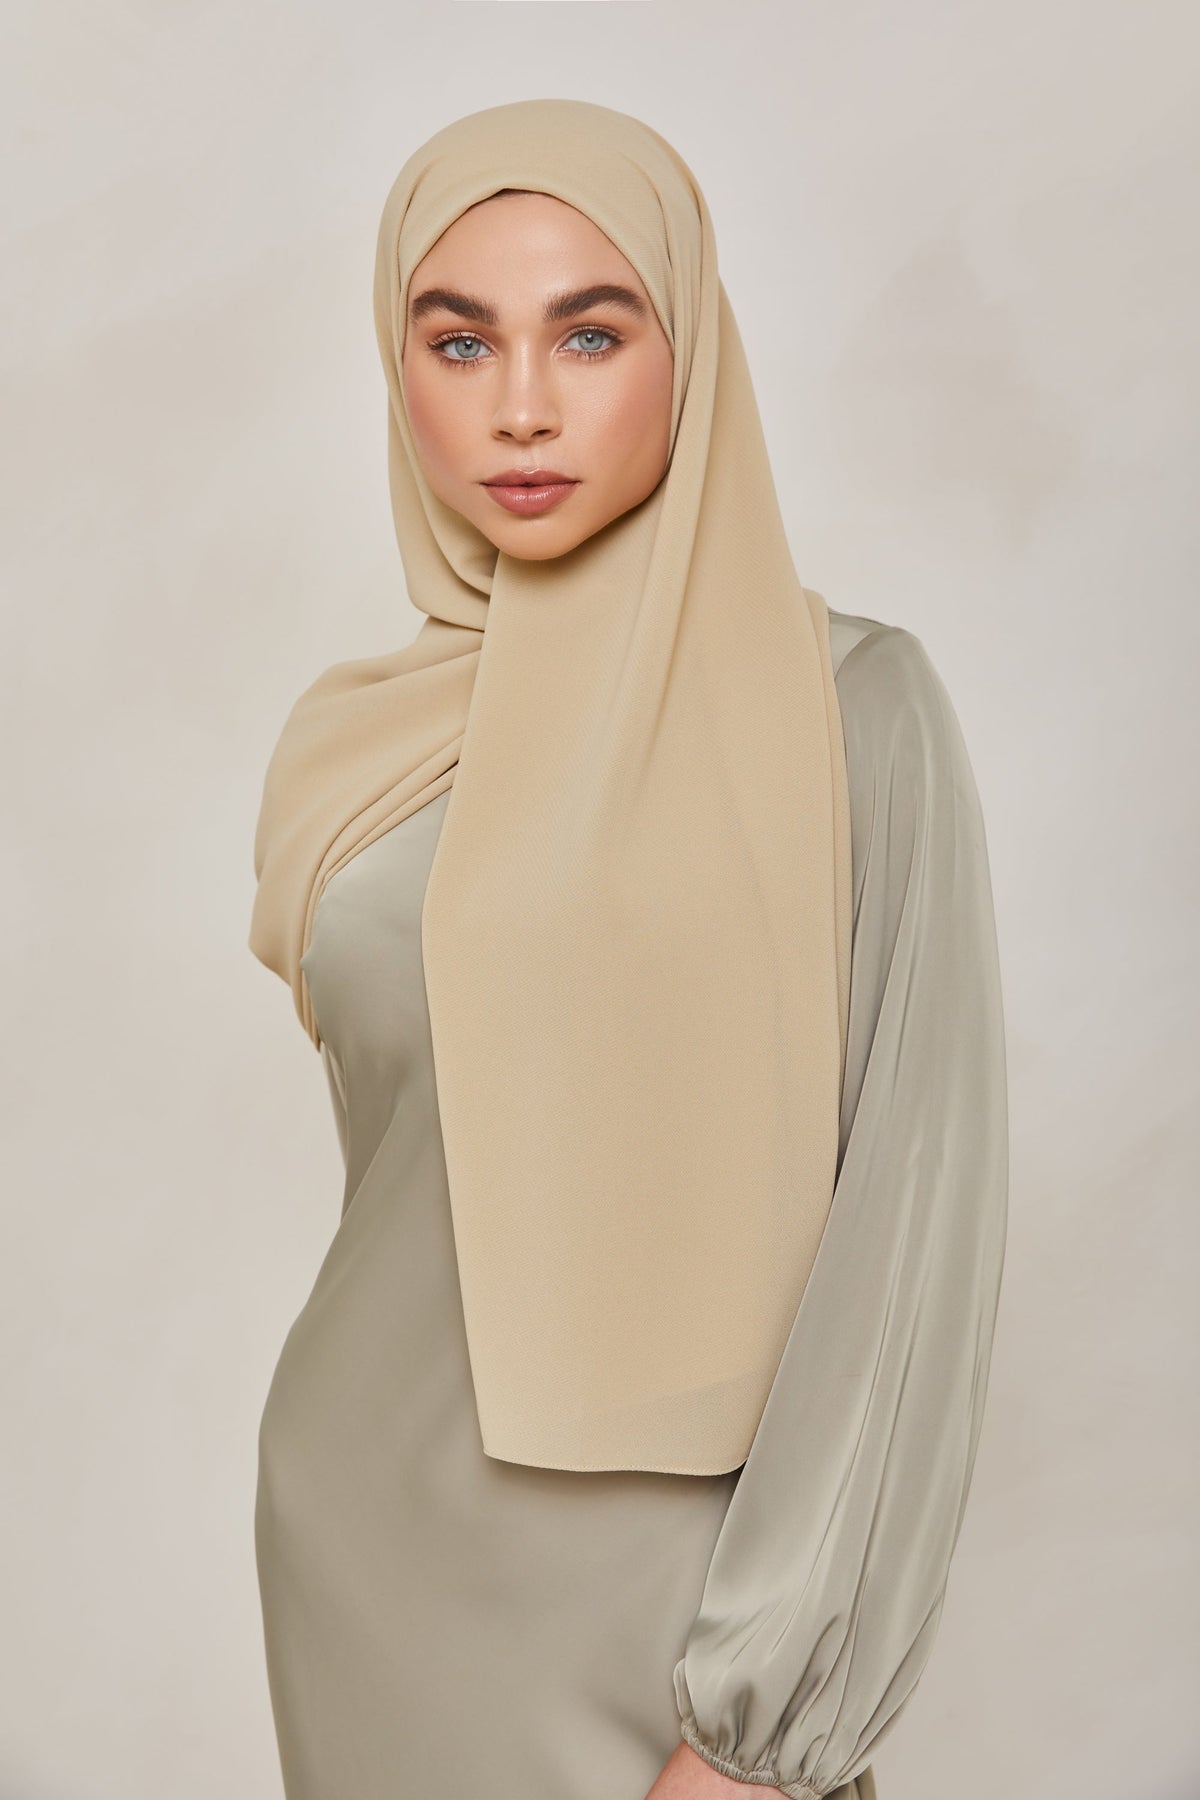 TEXTURE Twill Chiffon Hijab - Laid Back Veiled Collection 